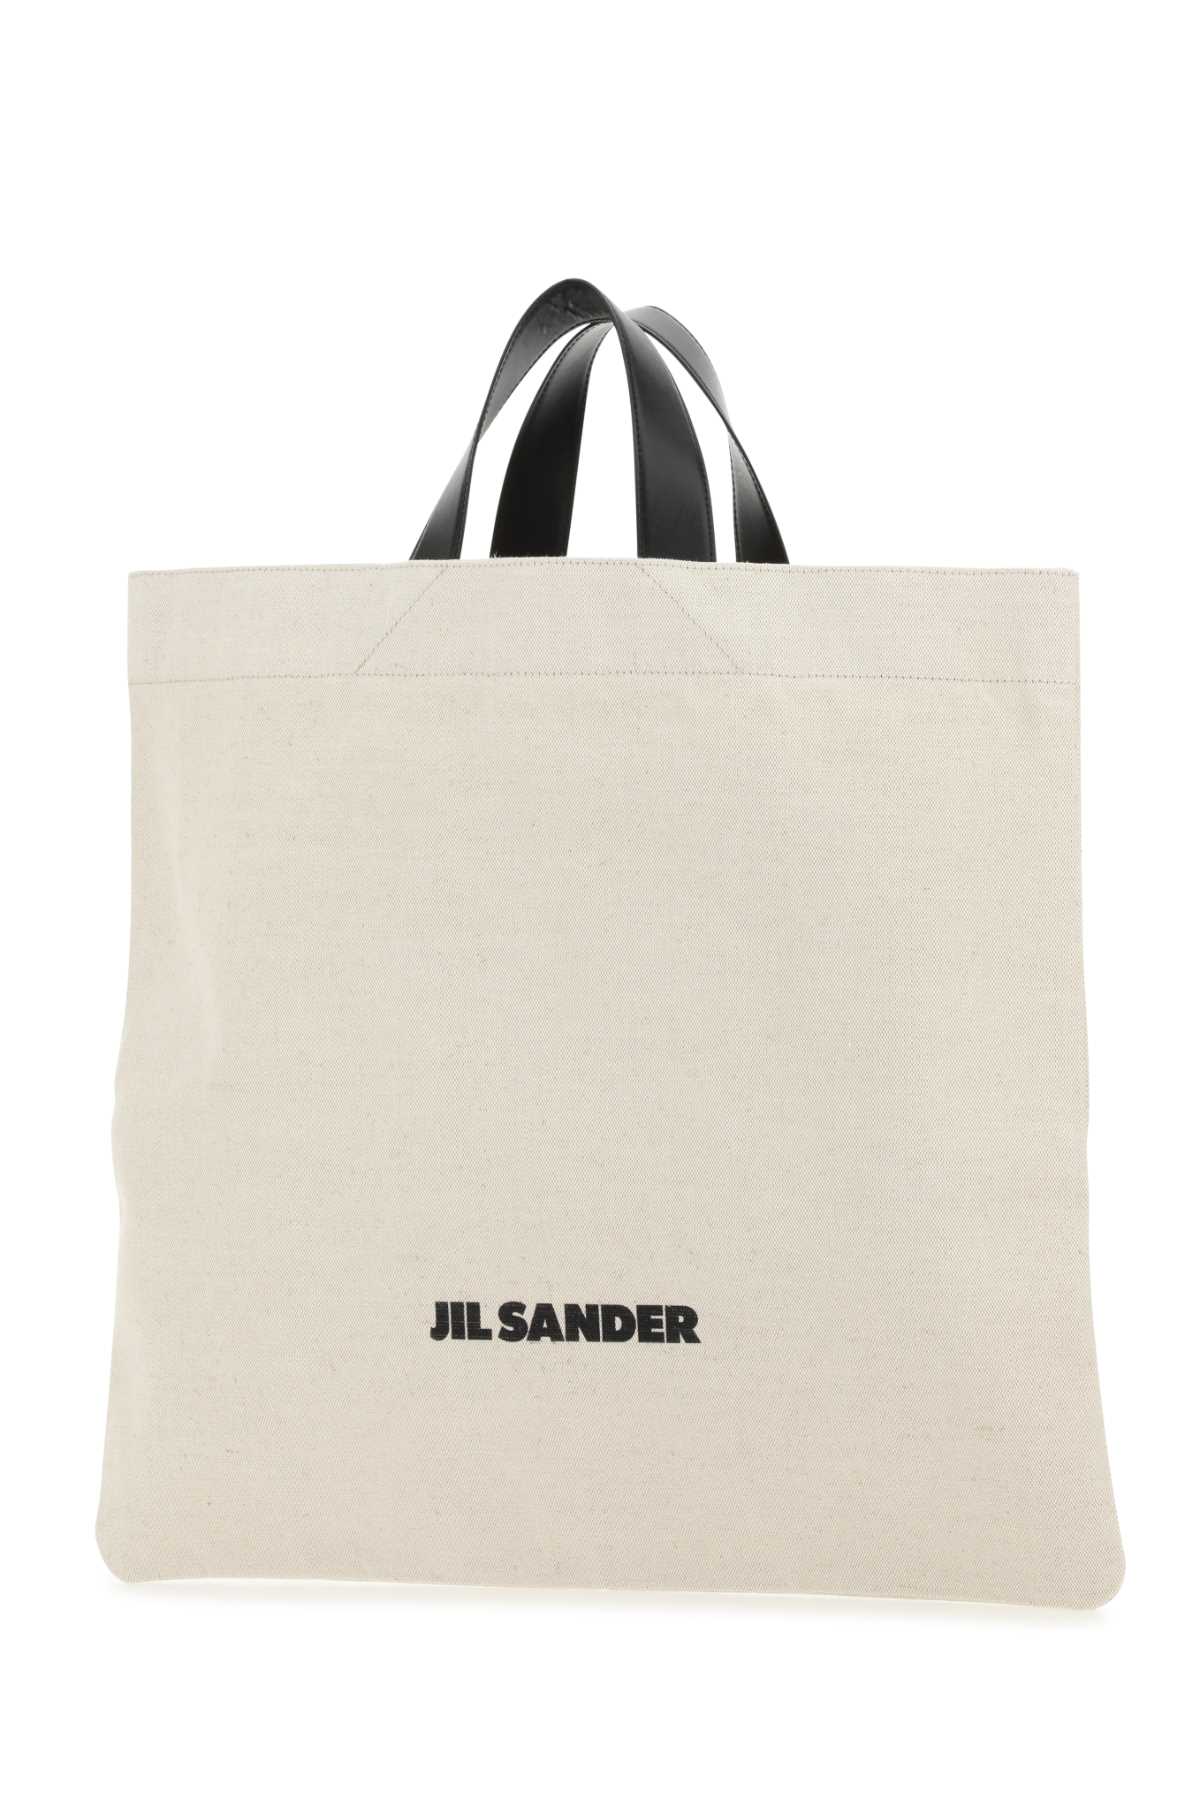 Jil Sander Sand Canvas Shopping Bag In 280